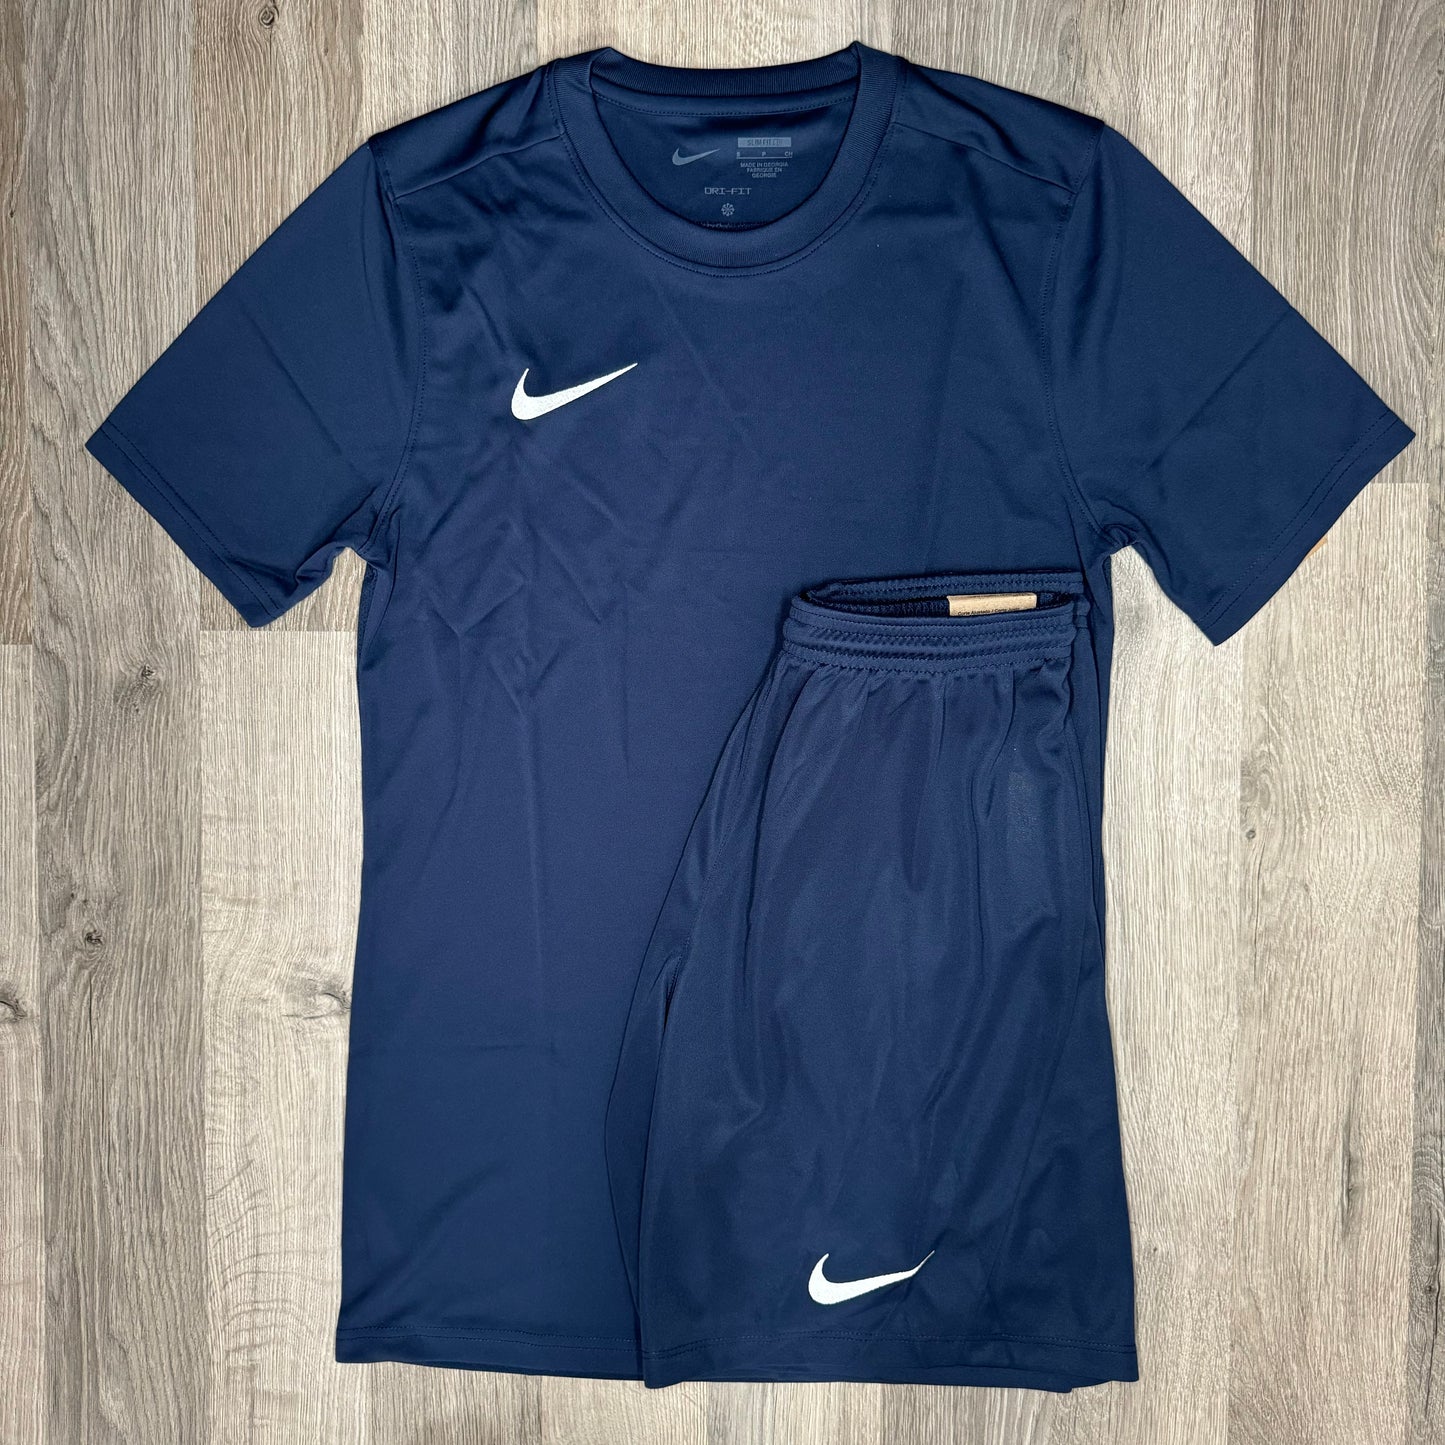 Nike Dri Fit Set - Tee & Shorts - Navy (Junior)